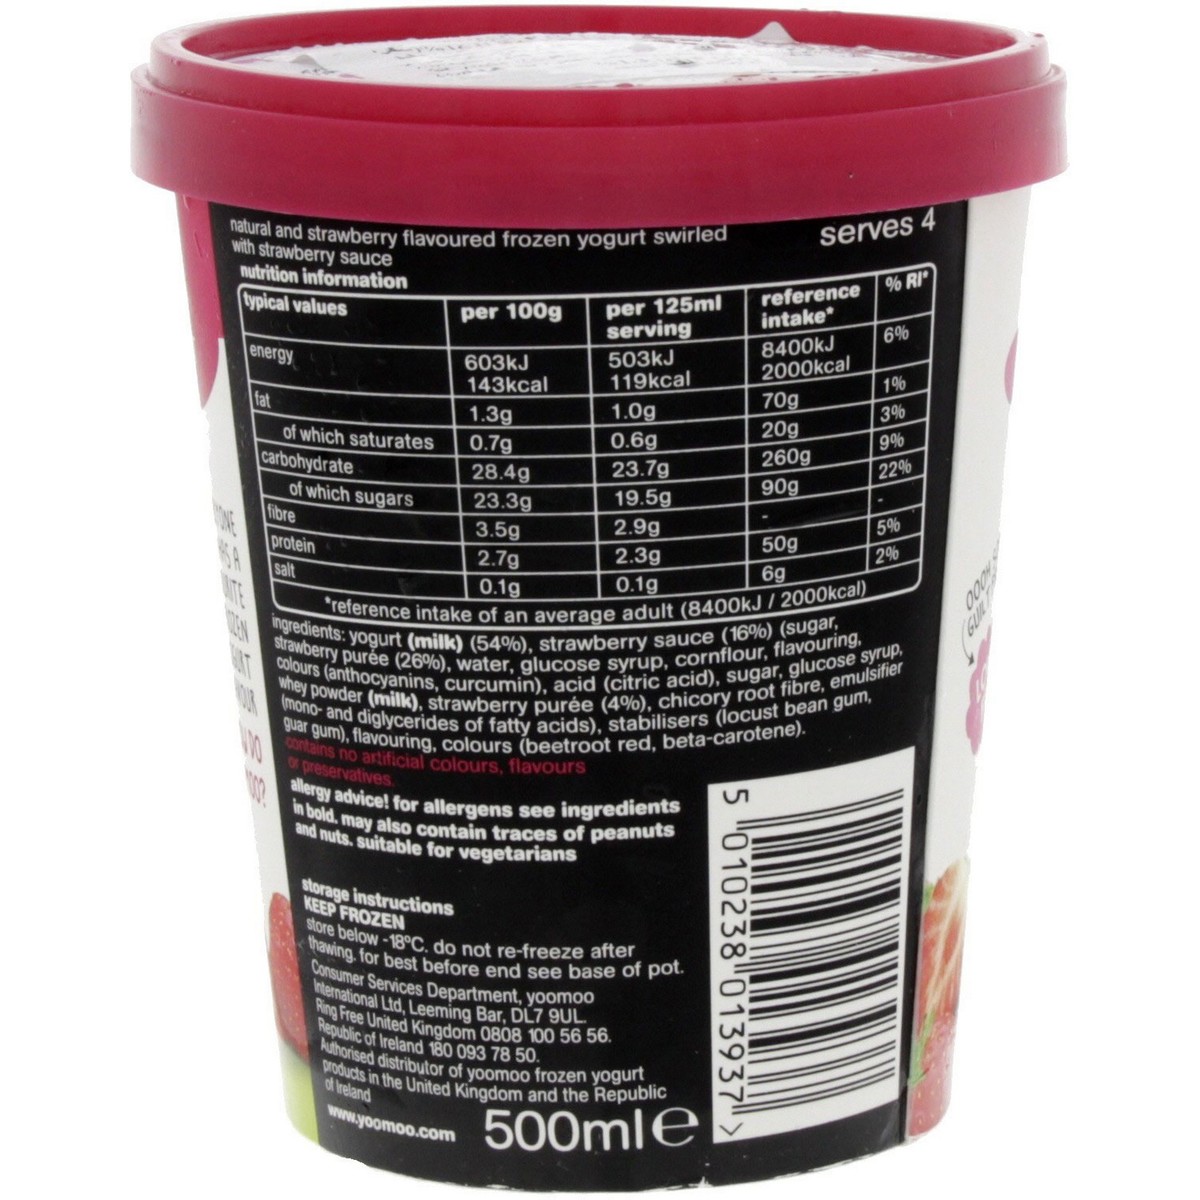 Yoo Moo Frozen Yogurt Strawberry Low Fat 500 ml